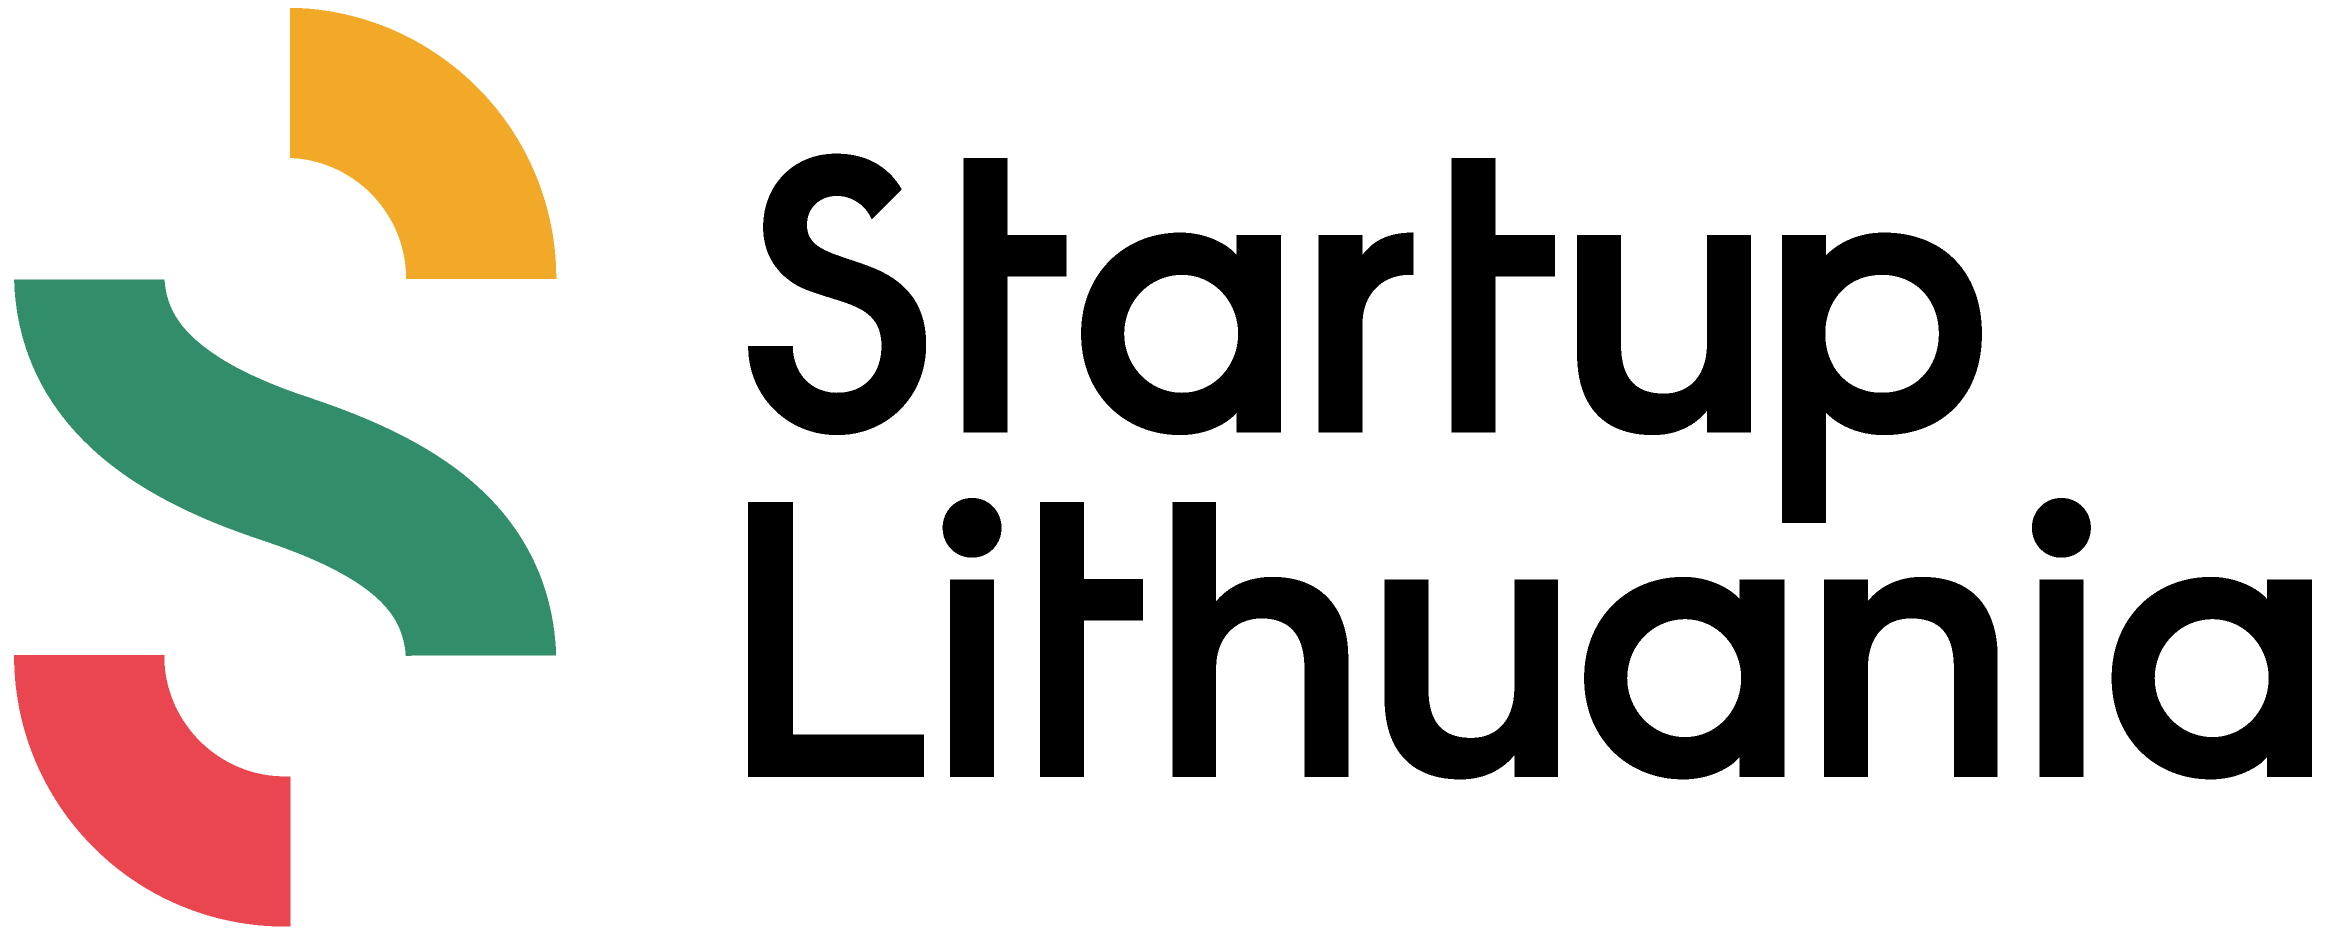 Startup Lithuania logo